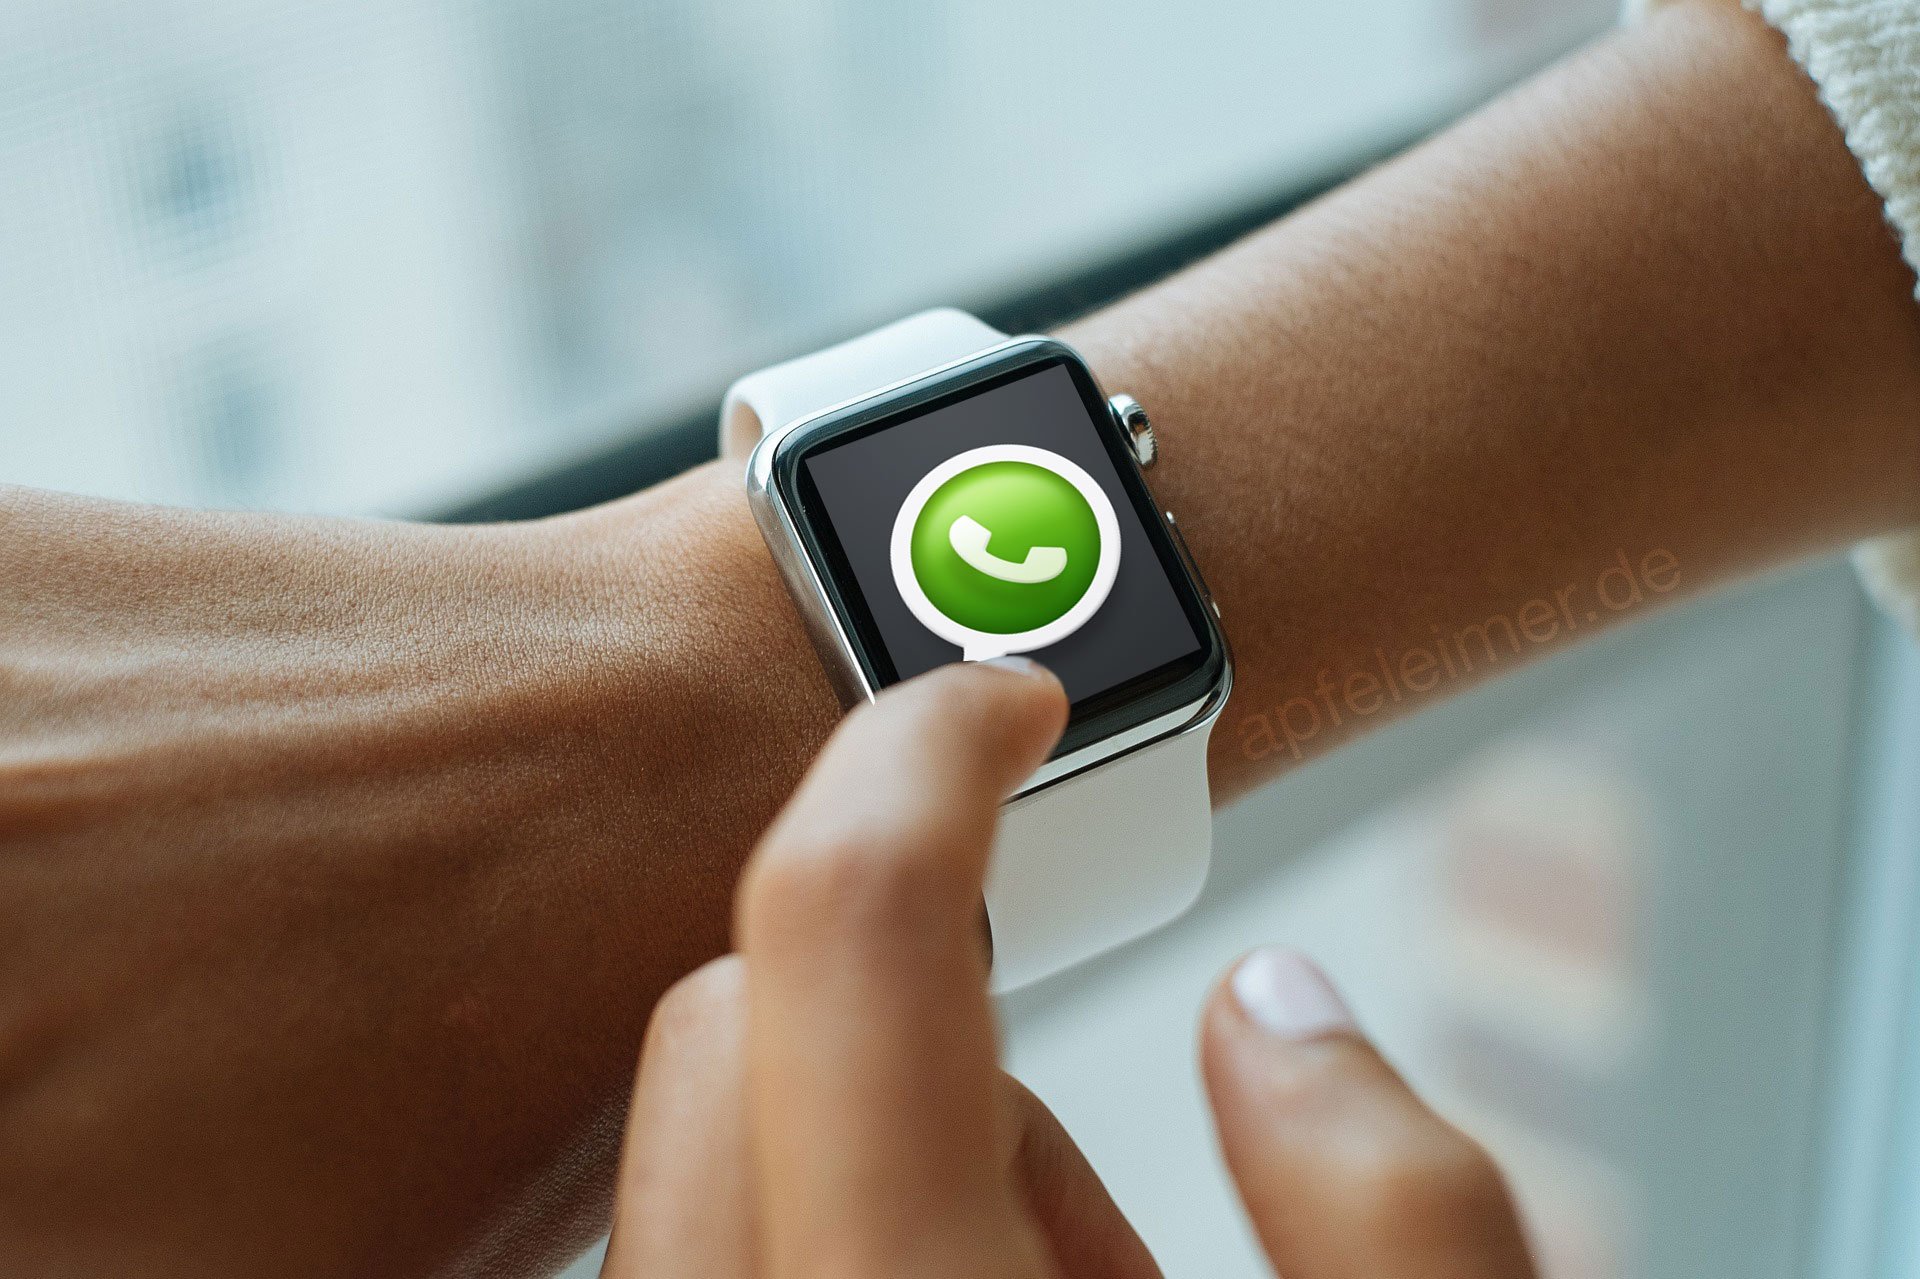 install whatsapp on apple watch